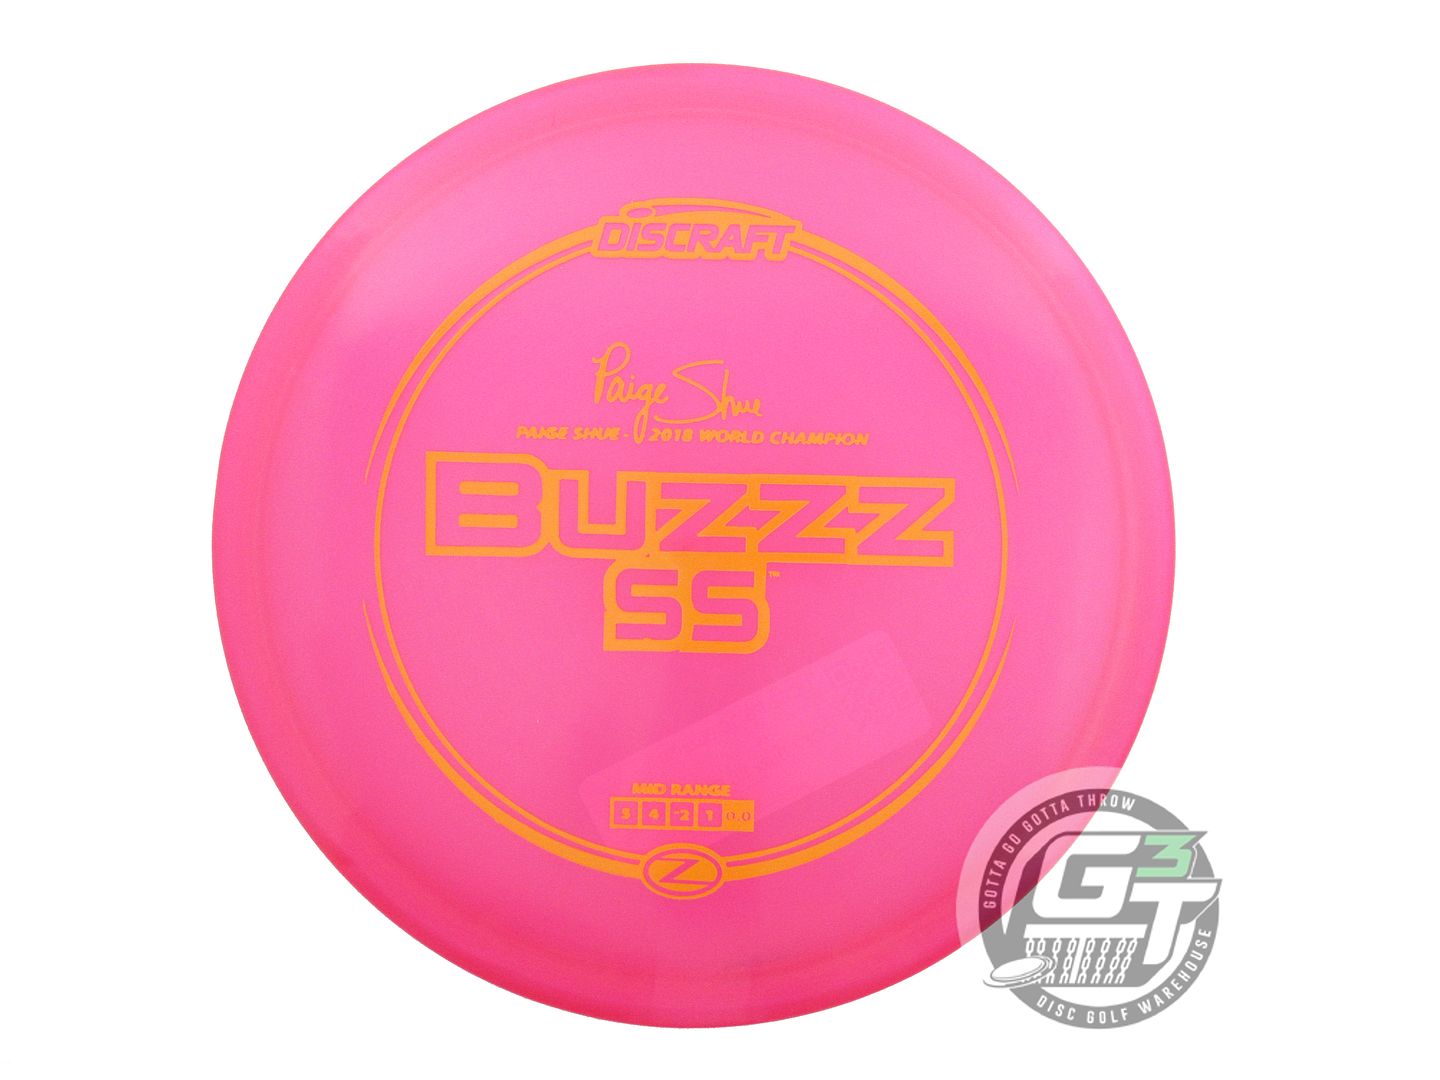 Discraft Elite Z Buzzz SS [Paige Shue 1X] Midrange Golf Disc (Individually Listed)